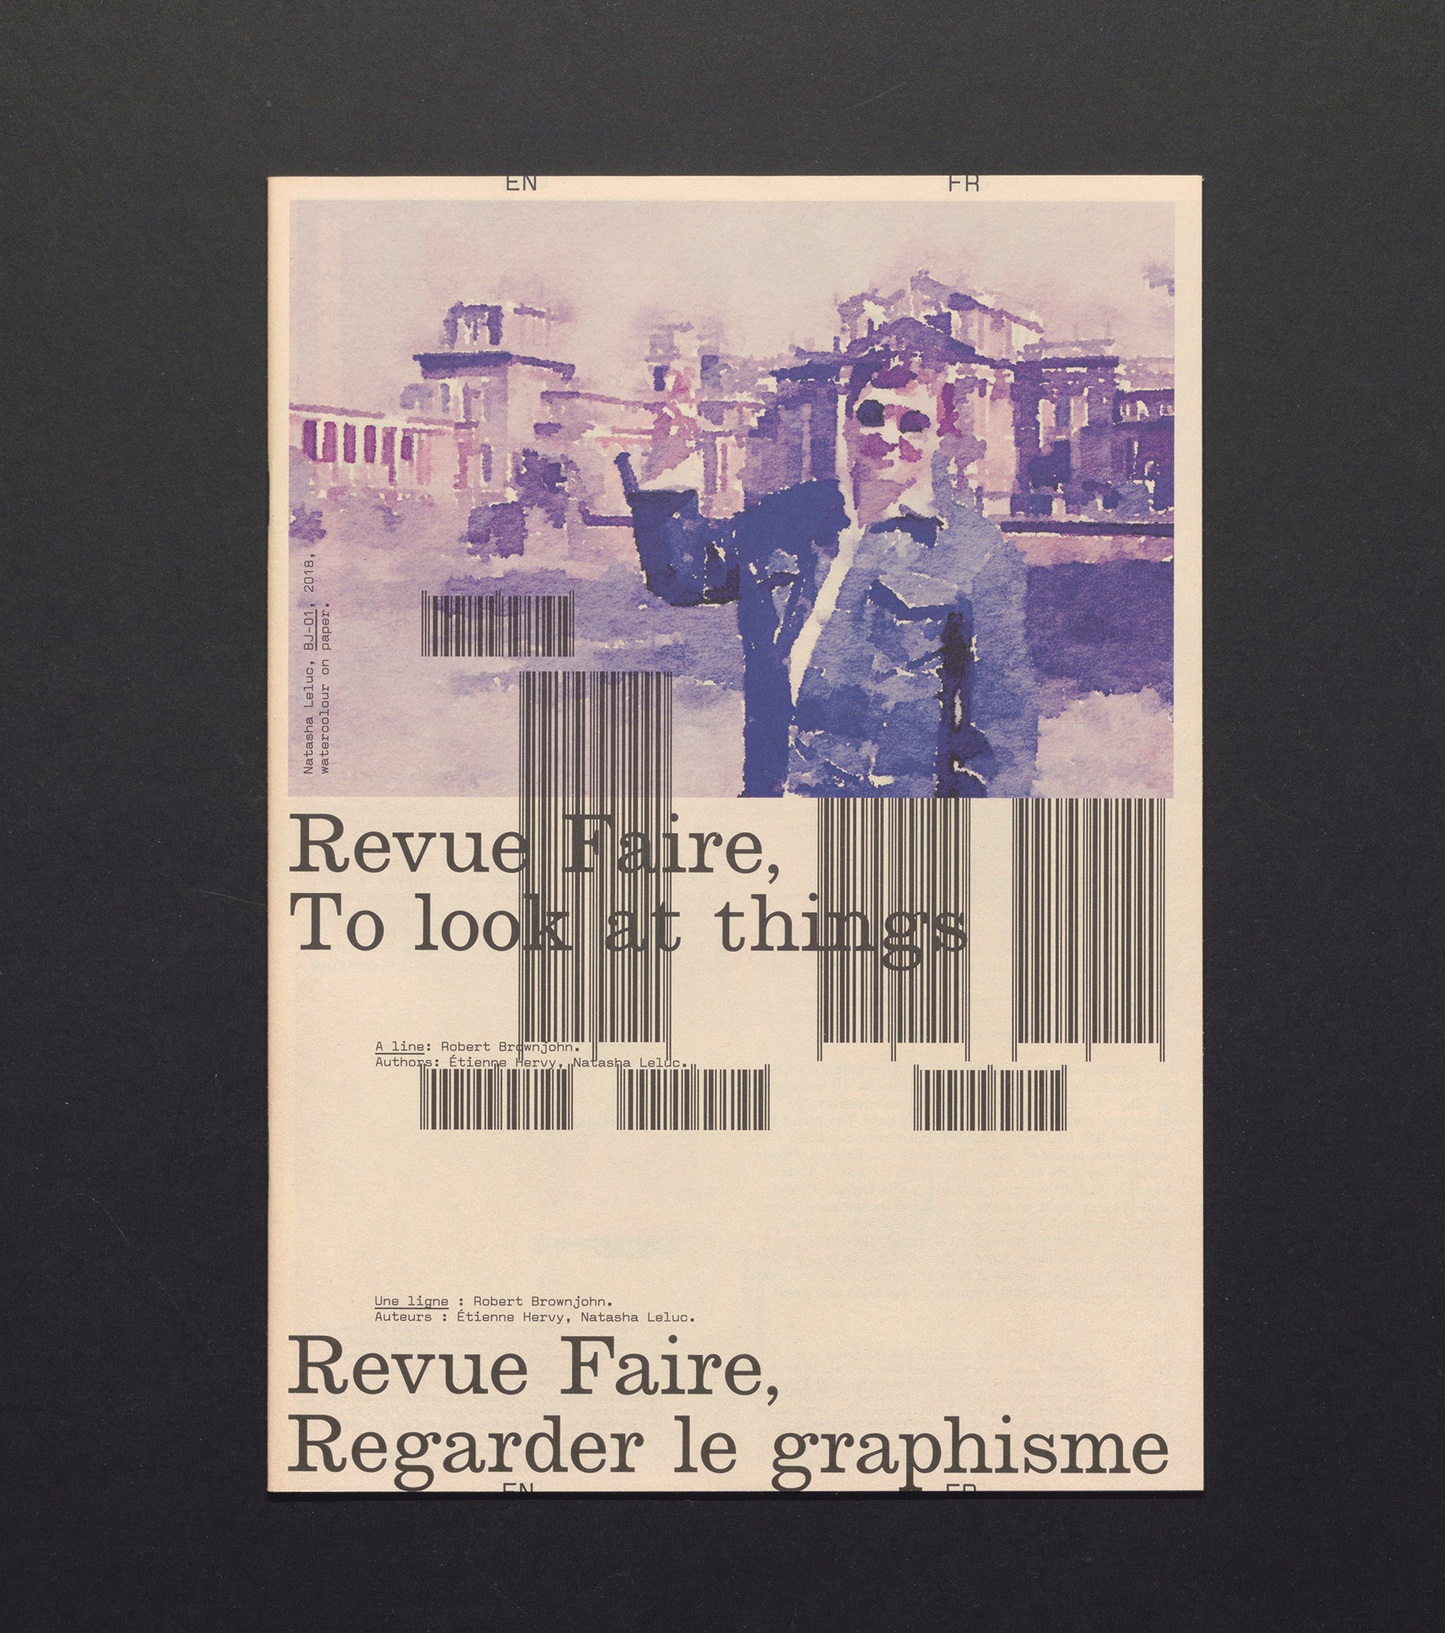 Revue Faire No. 10 - A line: Robert Brownjohn